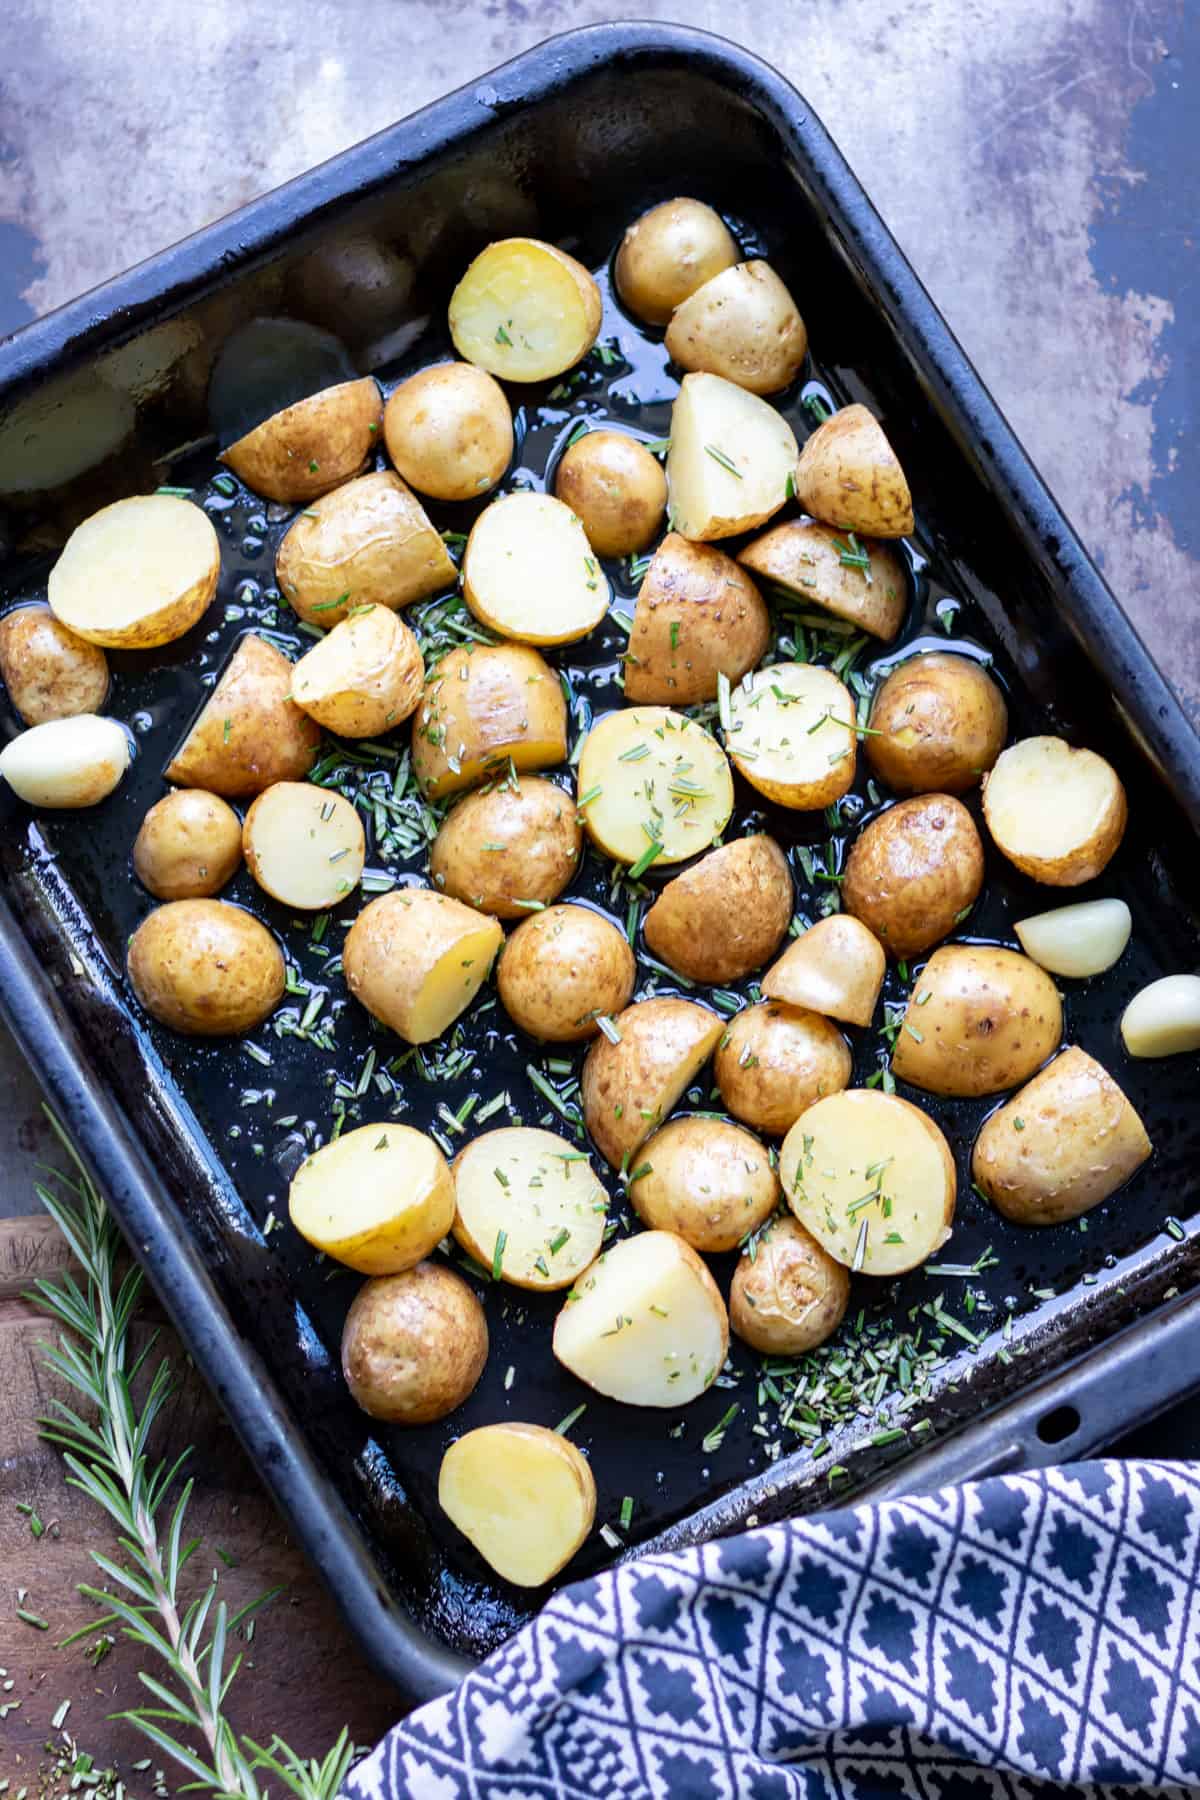 A pan of roasting potatoes.